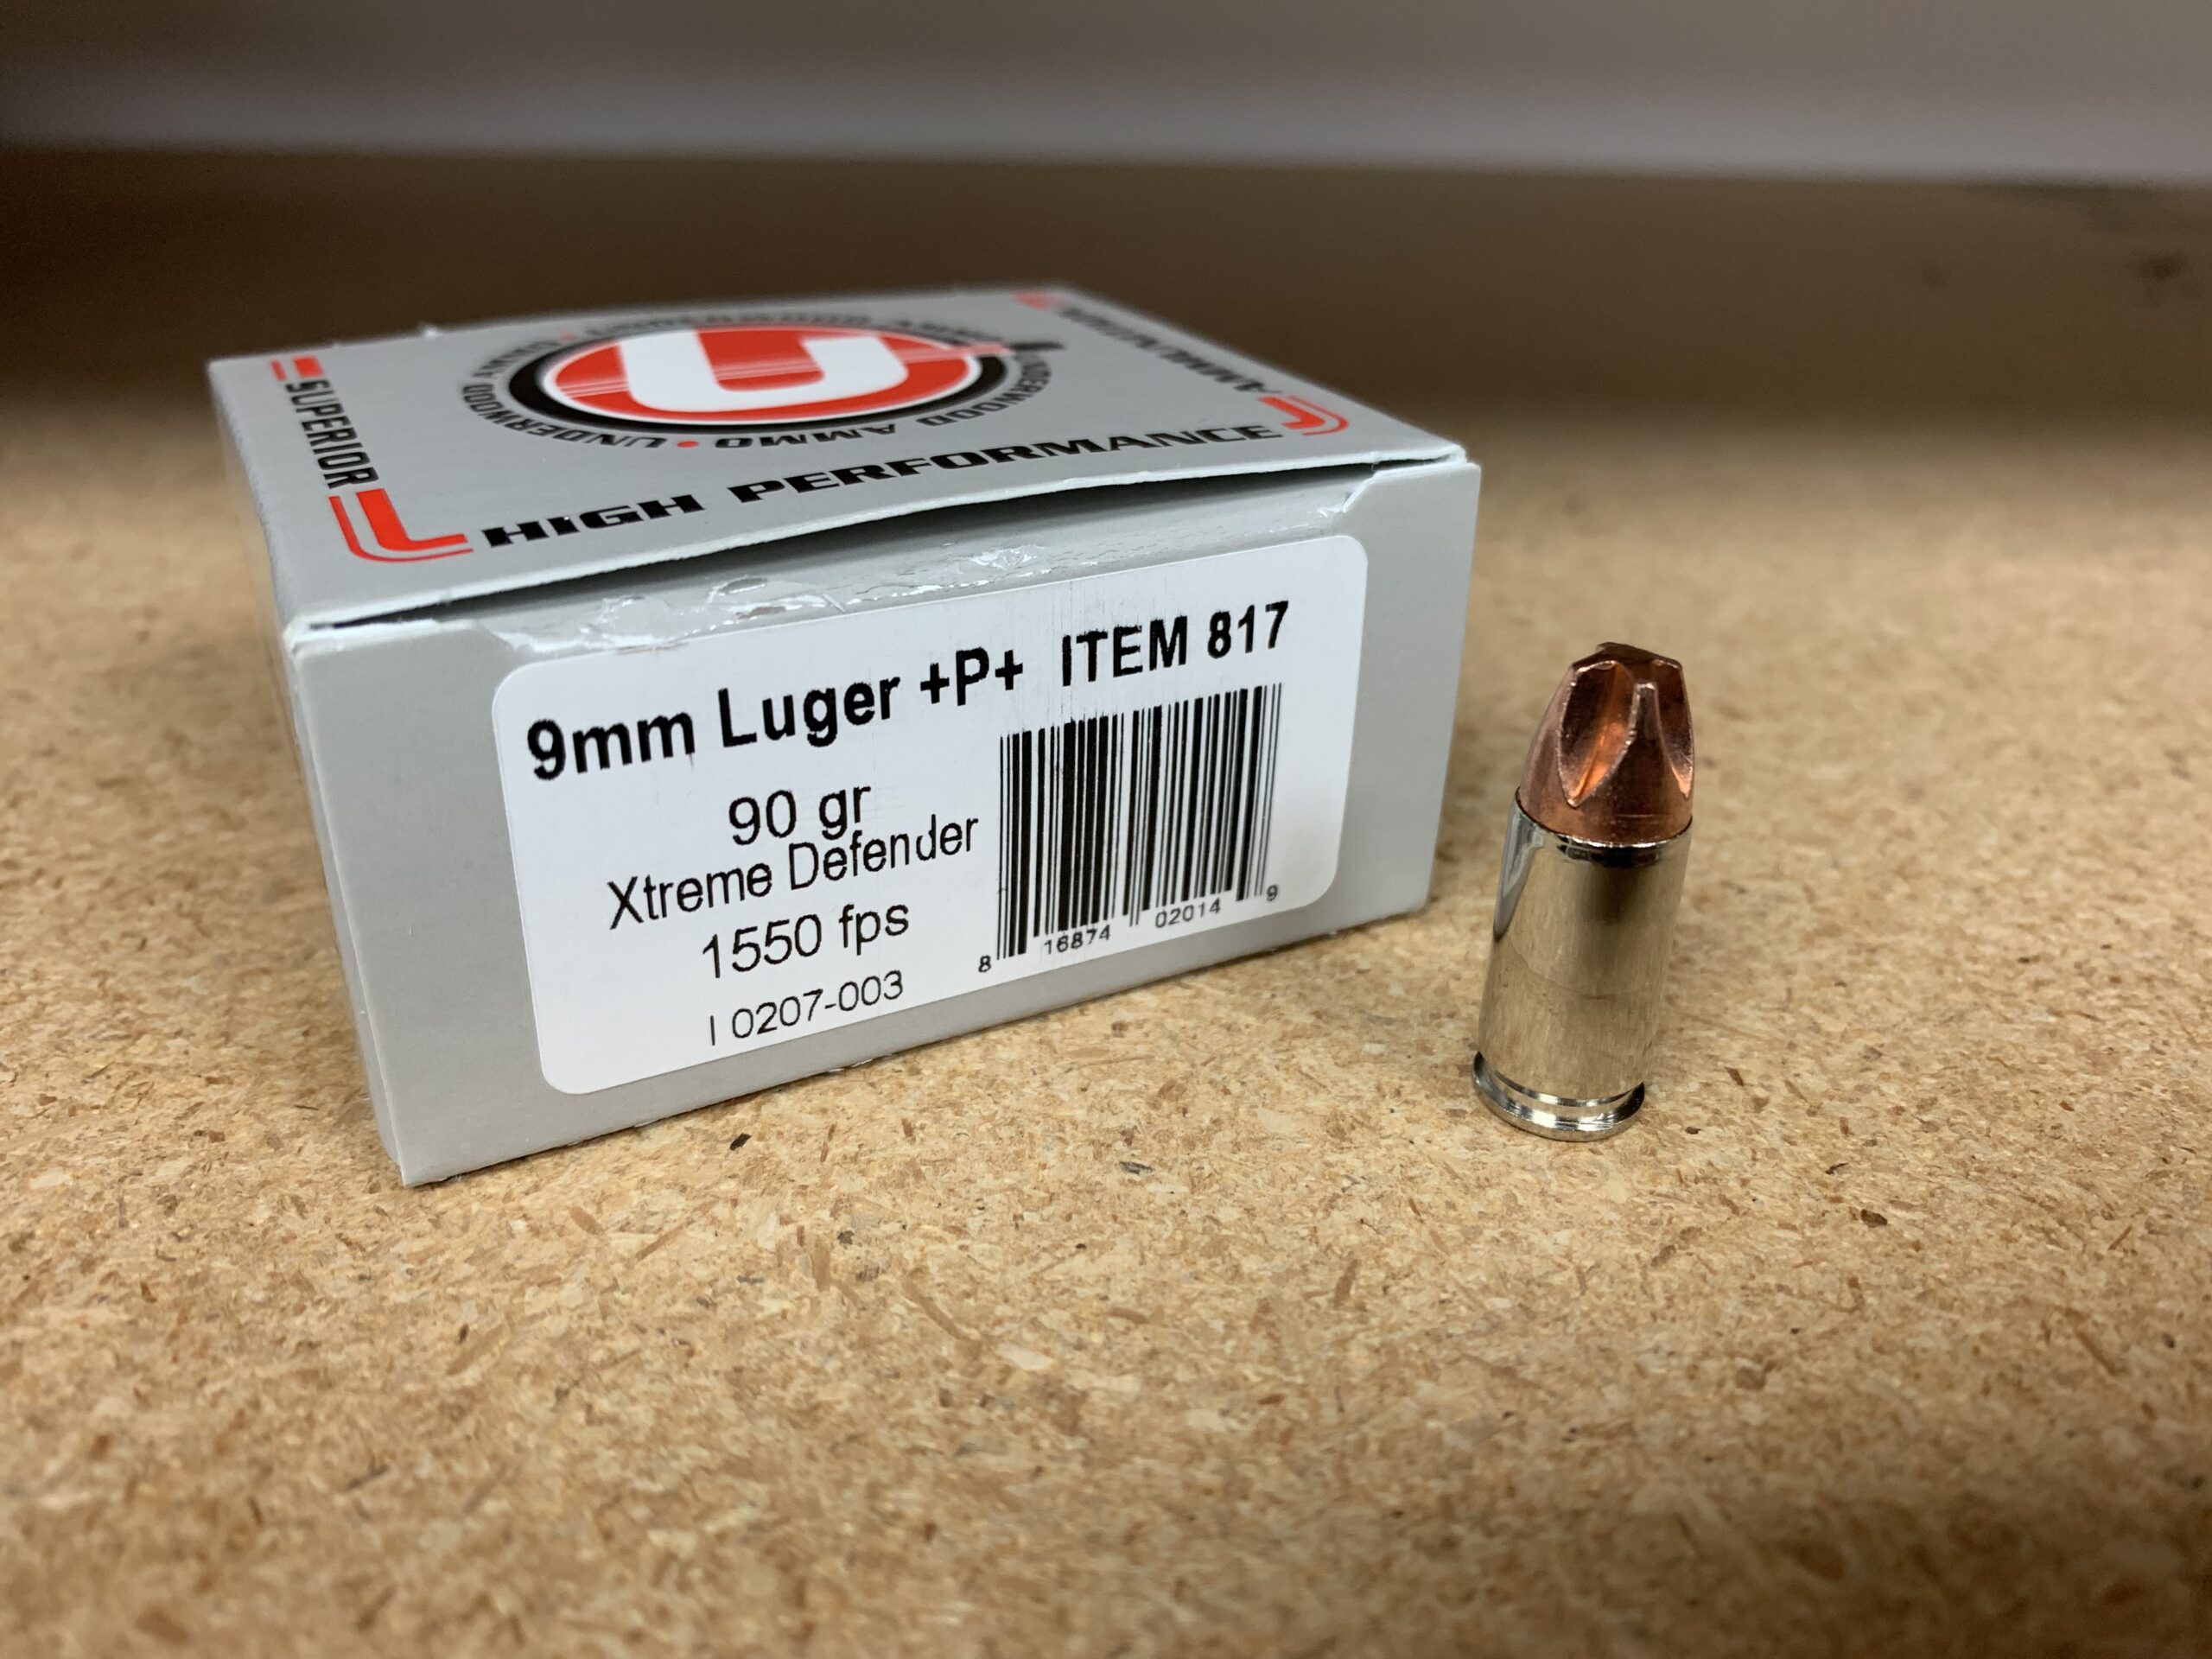 Underwood Extreme Defender 9mm ammo